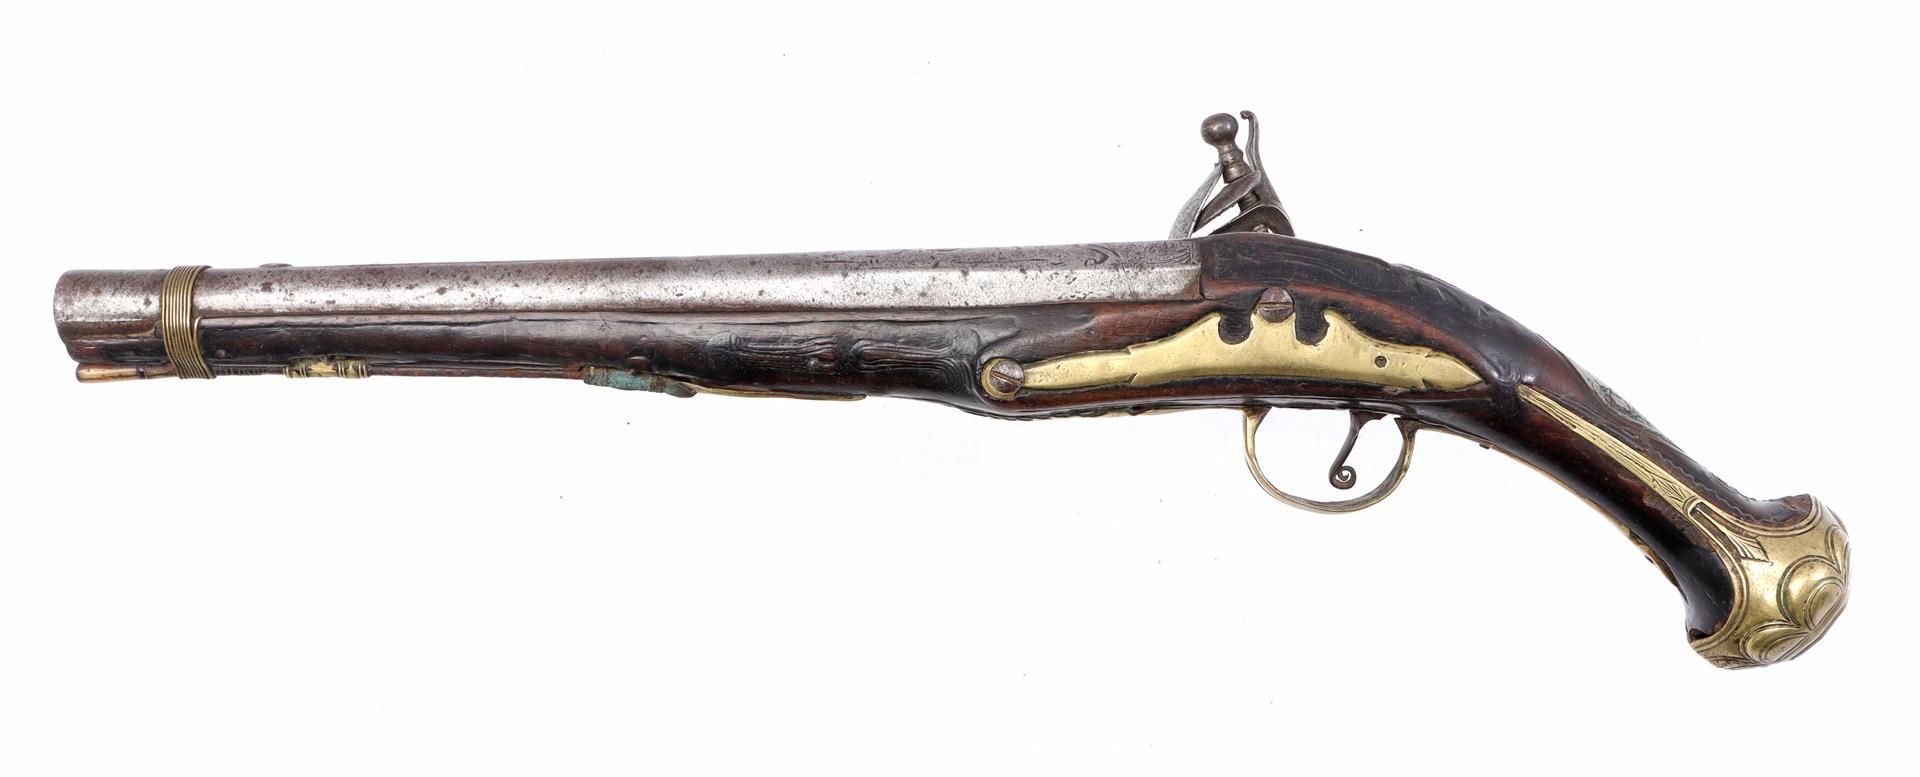 Walnut, brass and metal flint pistol - Image 2 of 8